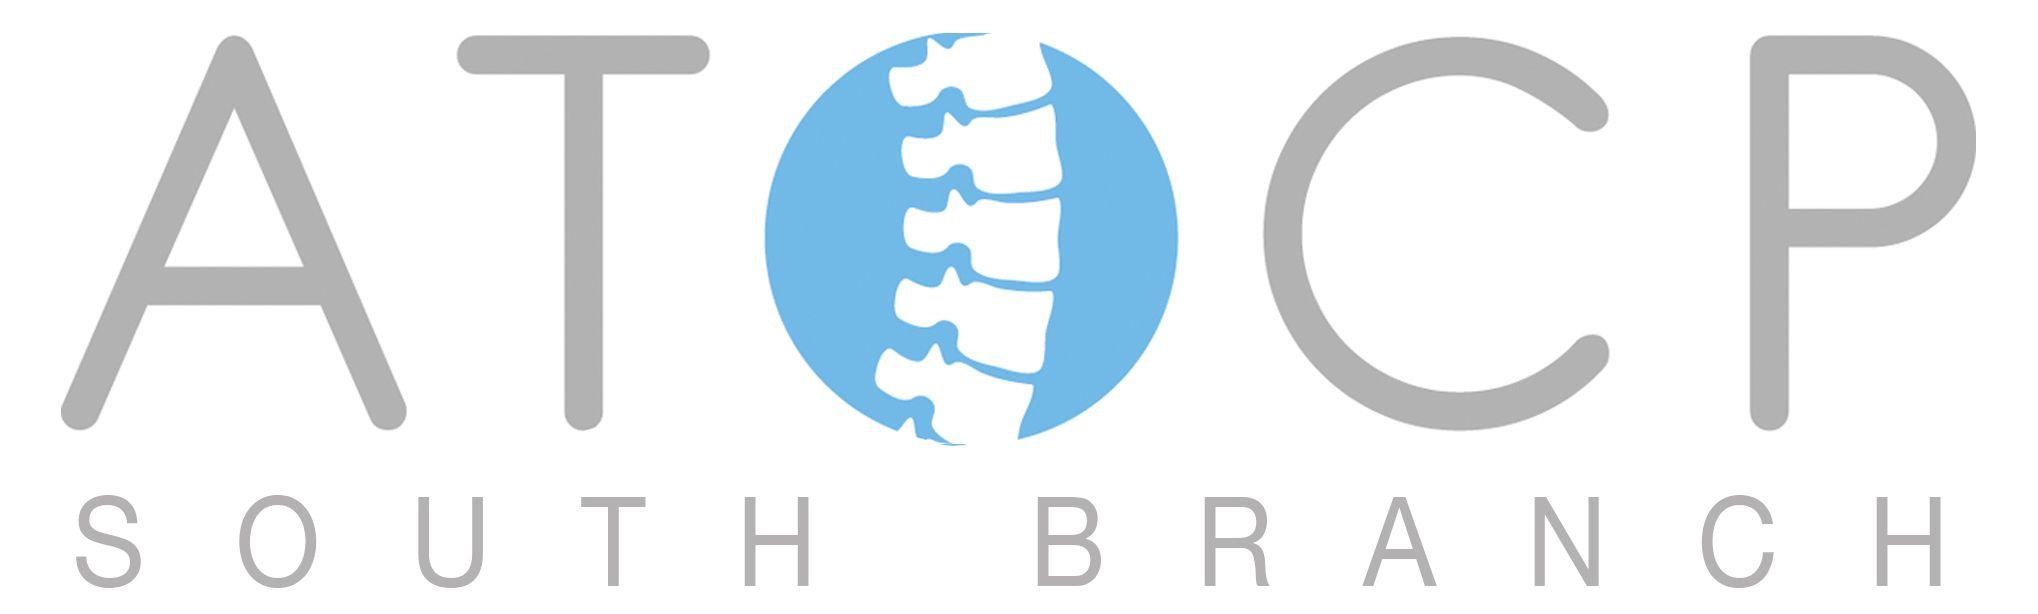 South Logo - ATOCP South logo | Association of Trauma and Orthopaedic Chartered ...